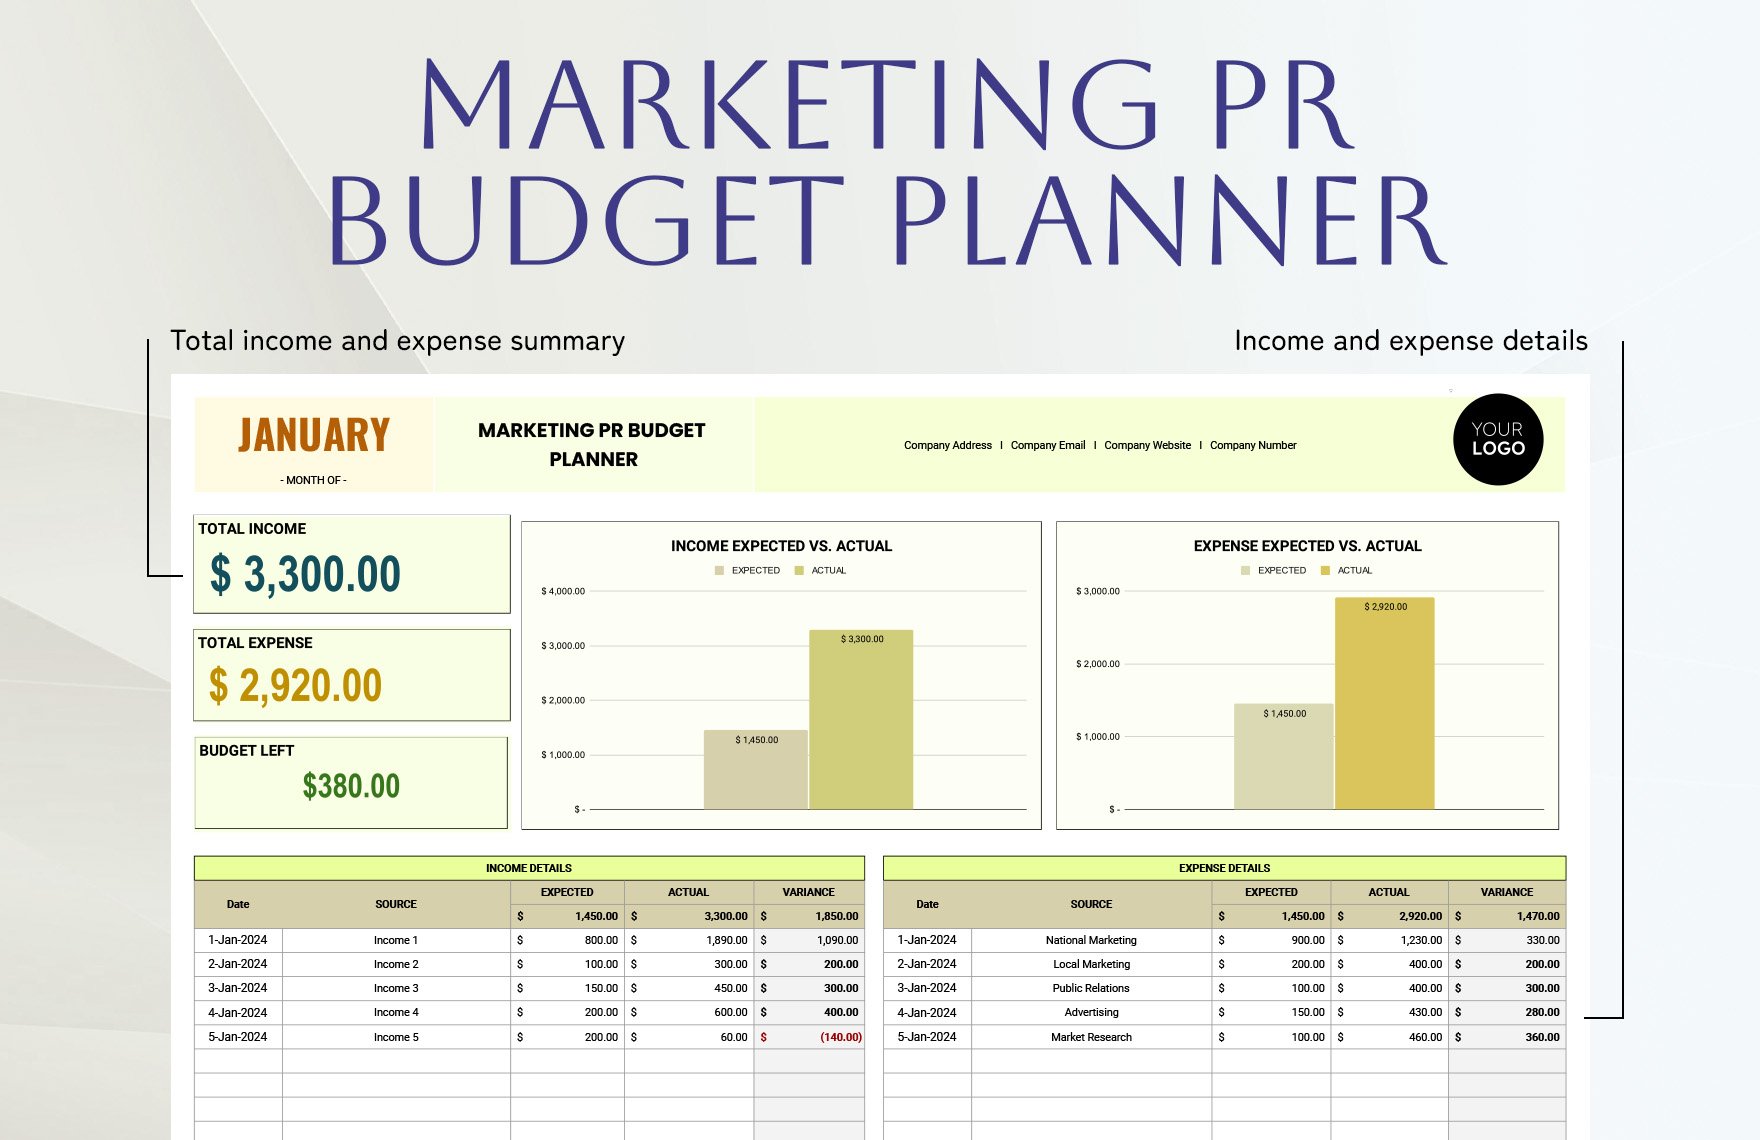 Marketing PR Budget Planner Template